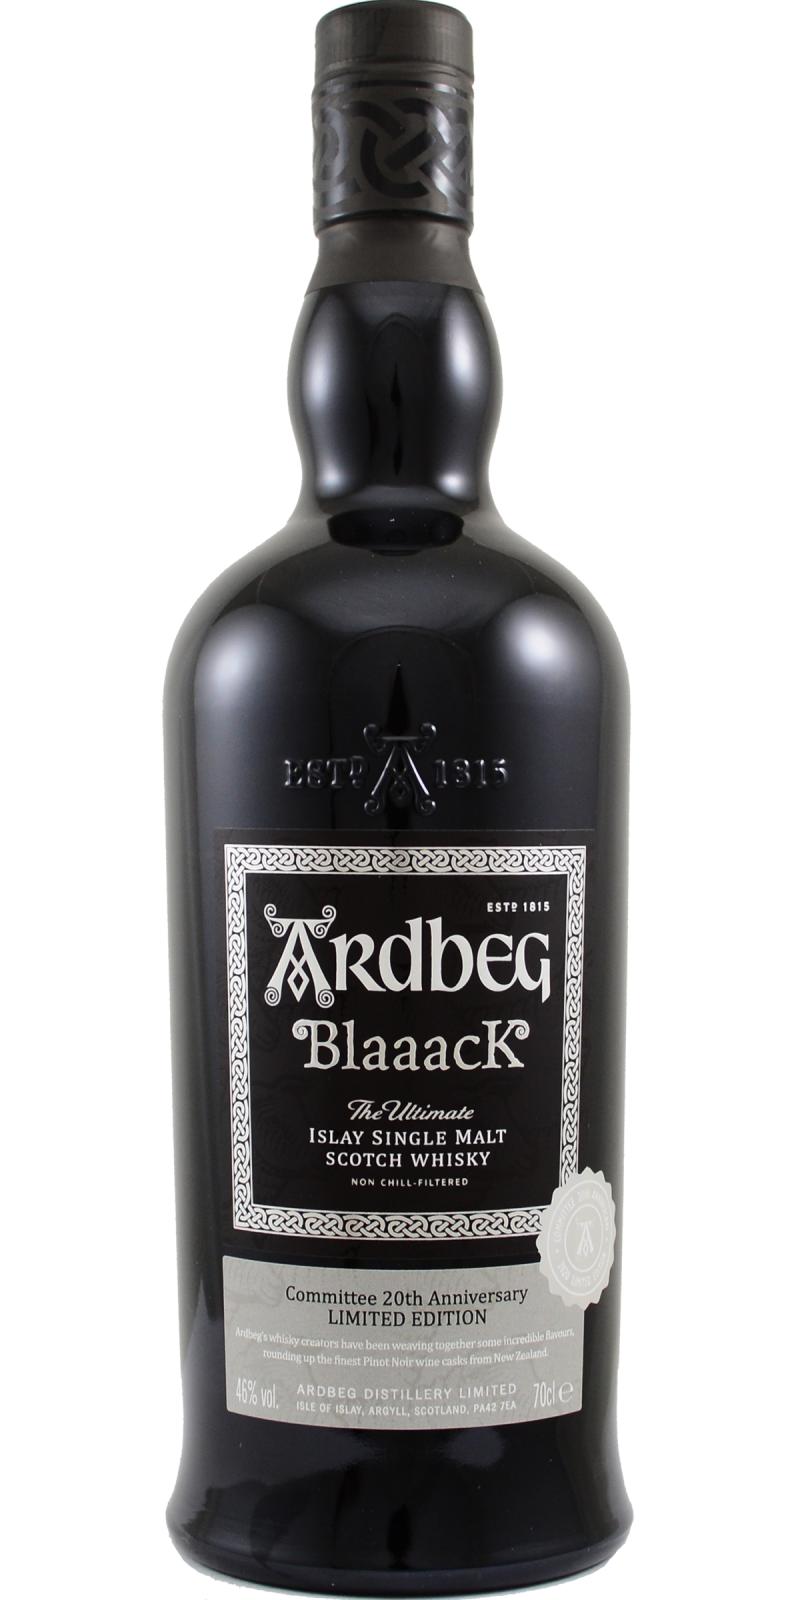 Ardbeg Blaaack - Ratings and reviews - Whiskybase